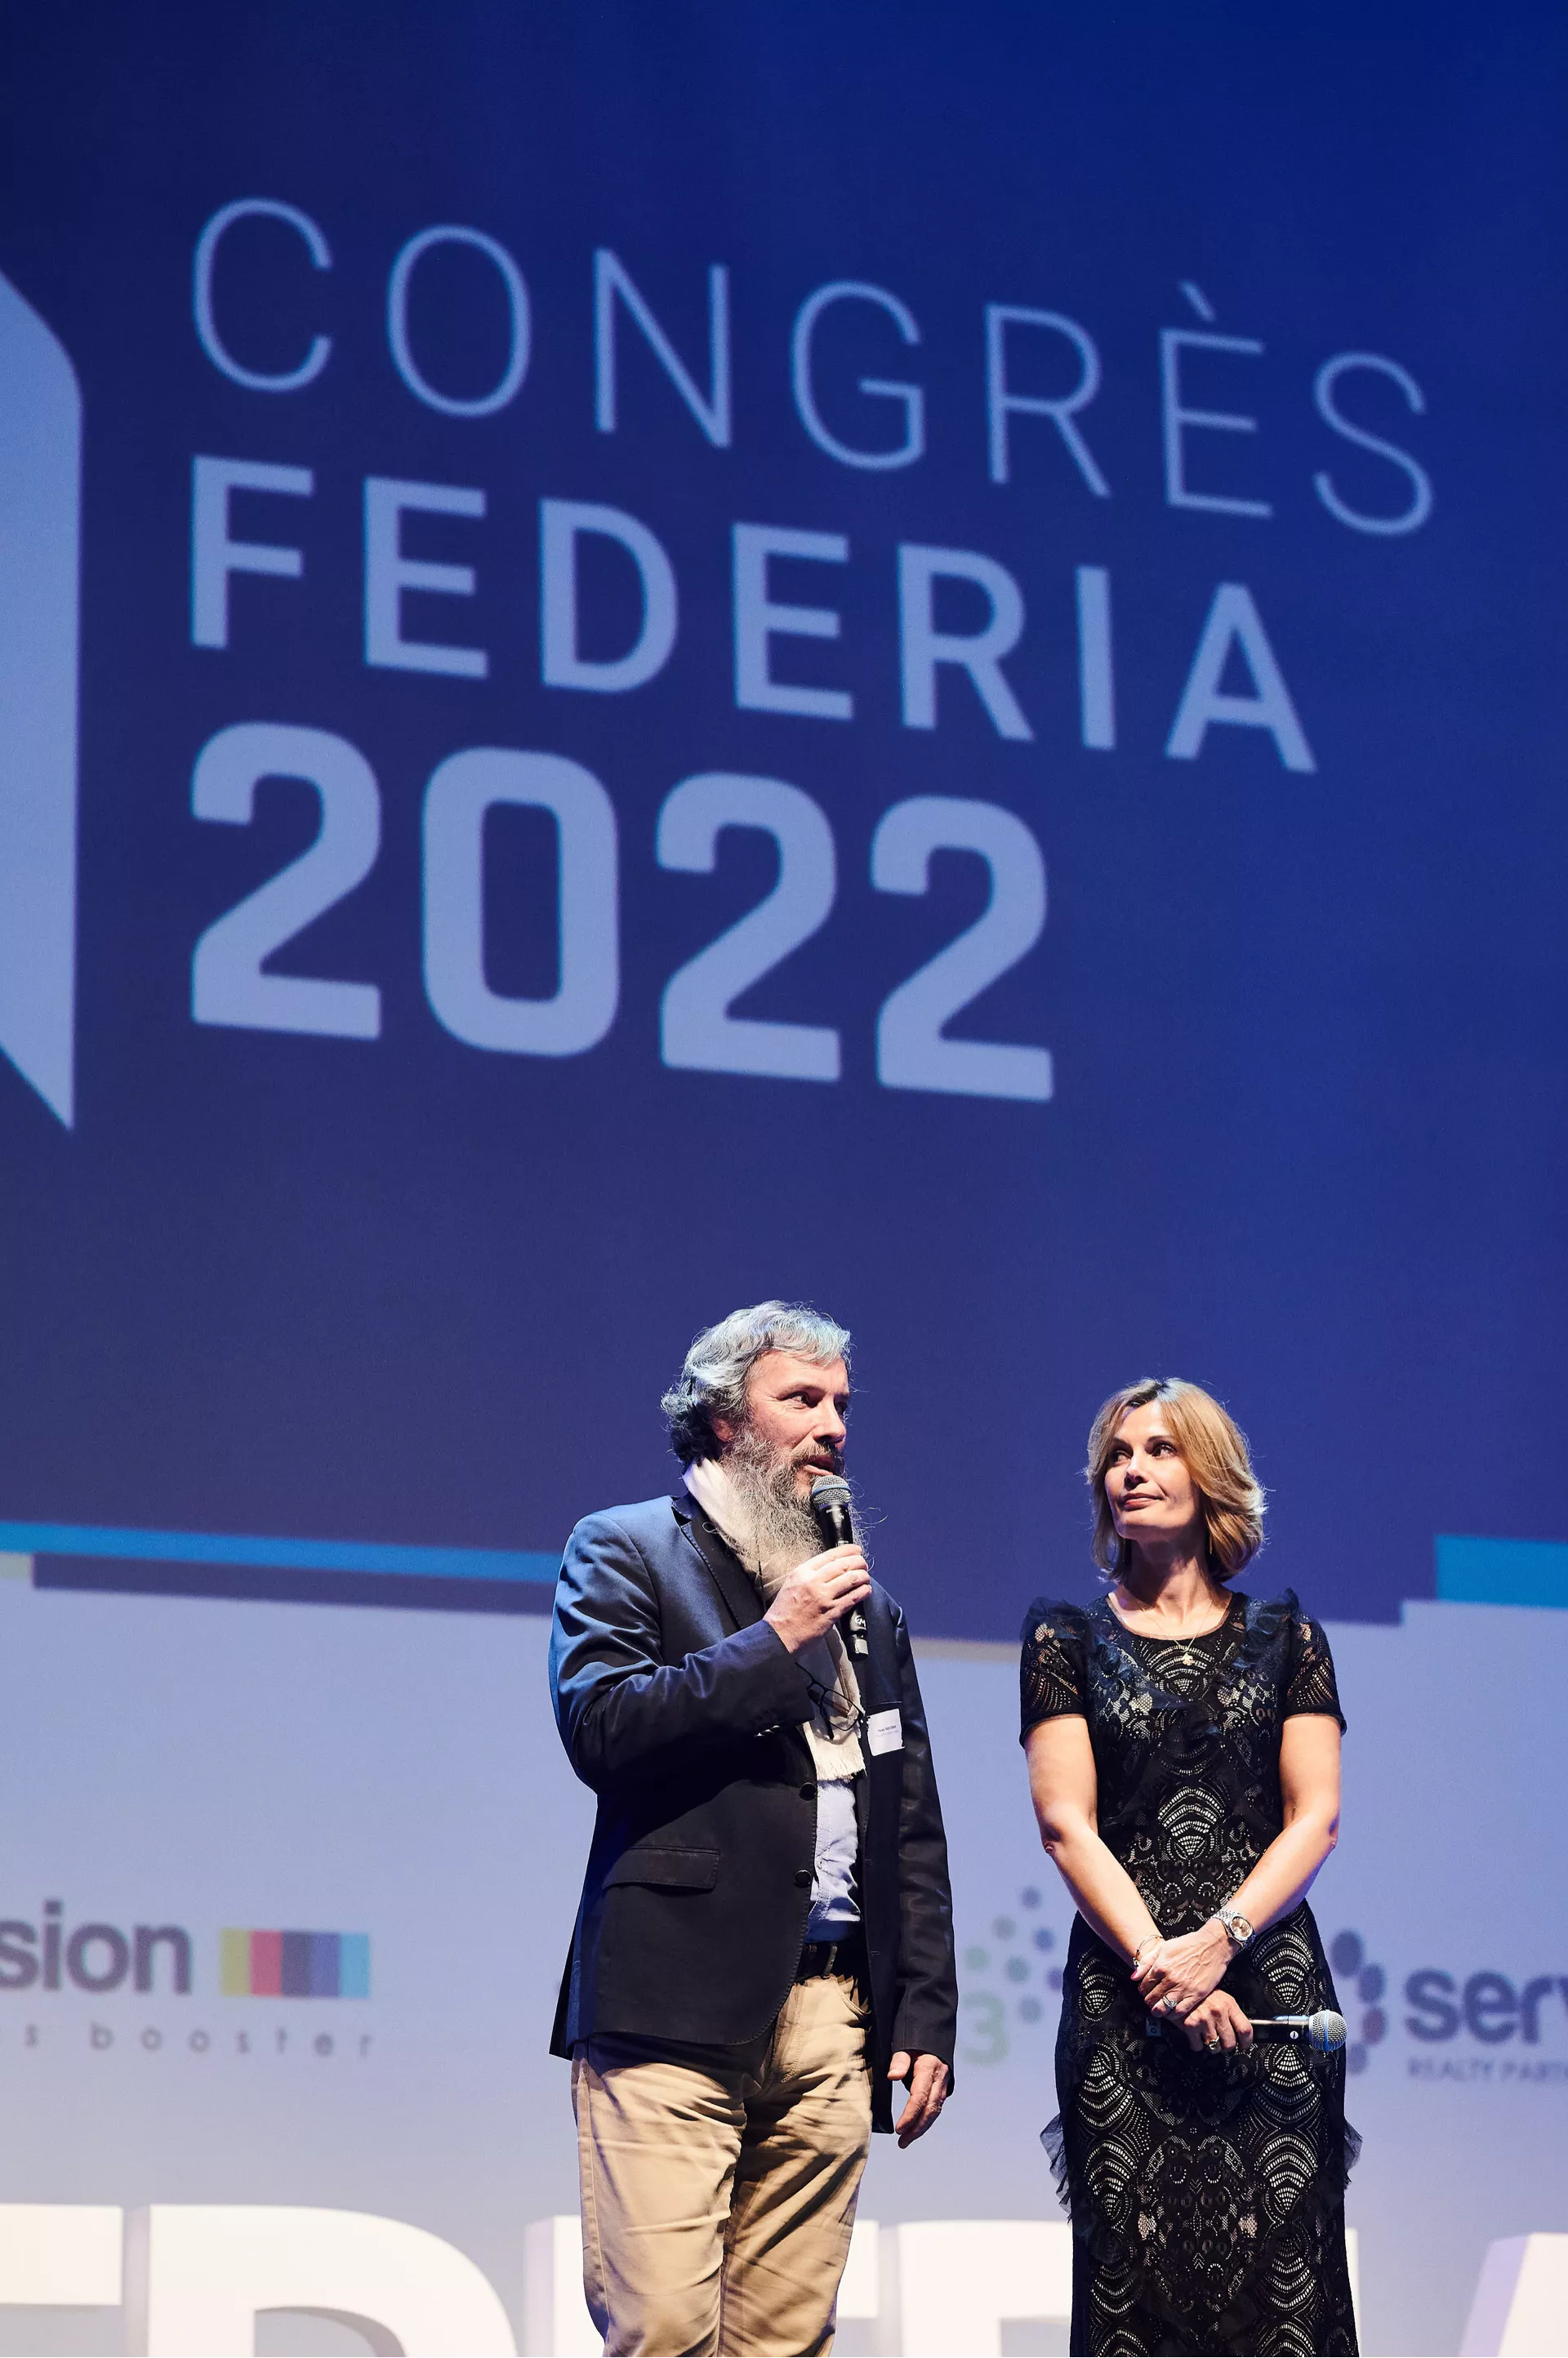 Congres 2022 - Federia